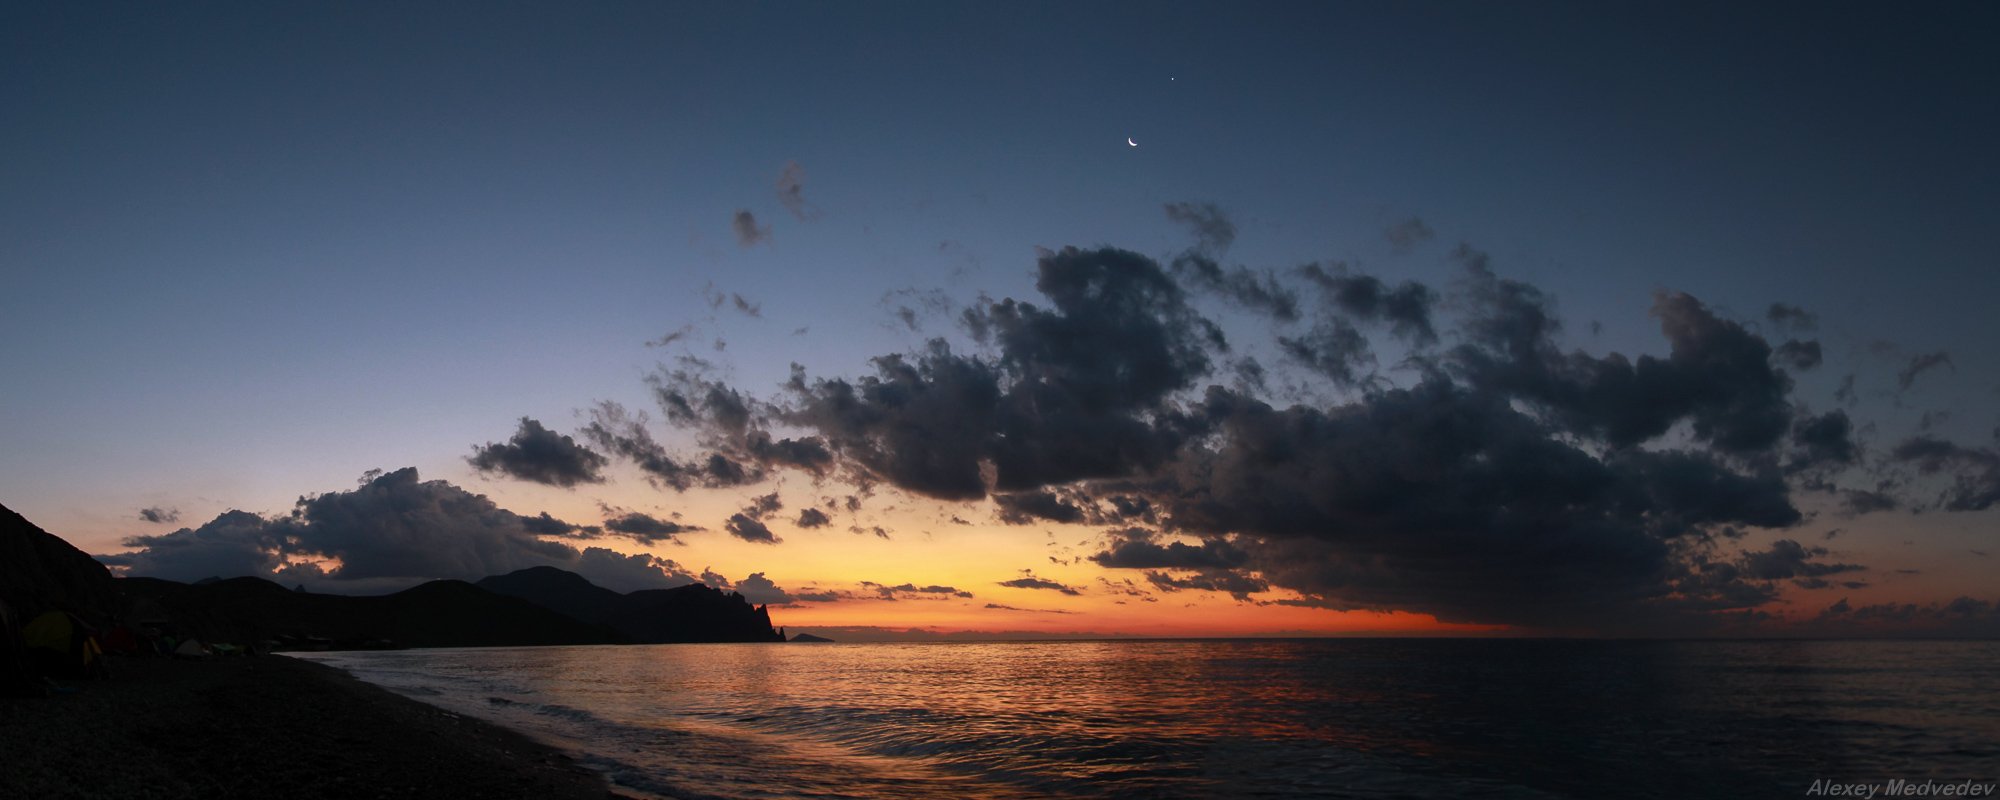 Крым, сумерки, утро, панорама, море, рассвет, карадаг, Алексей Медведев